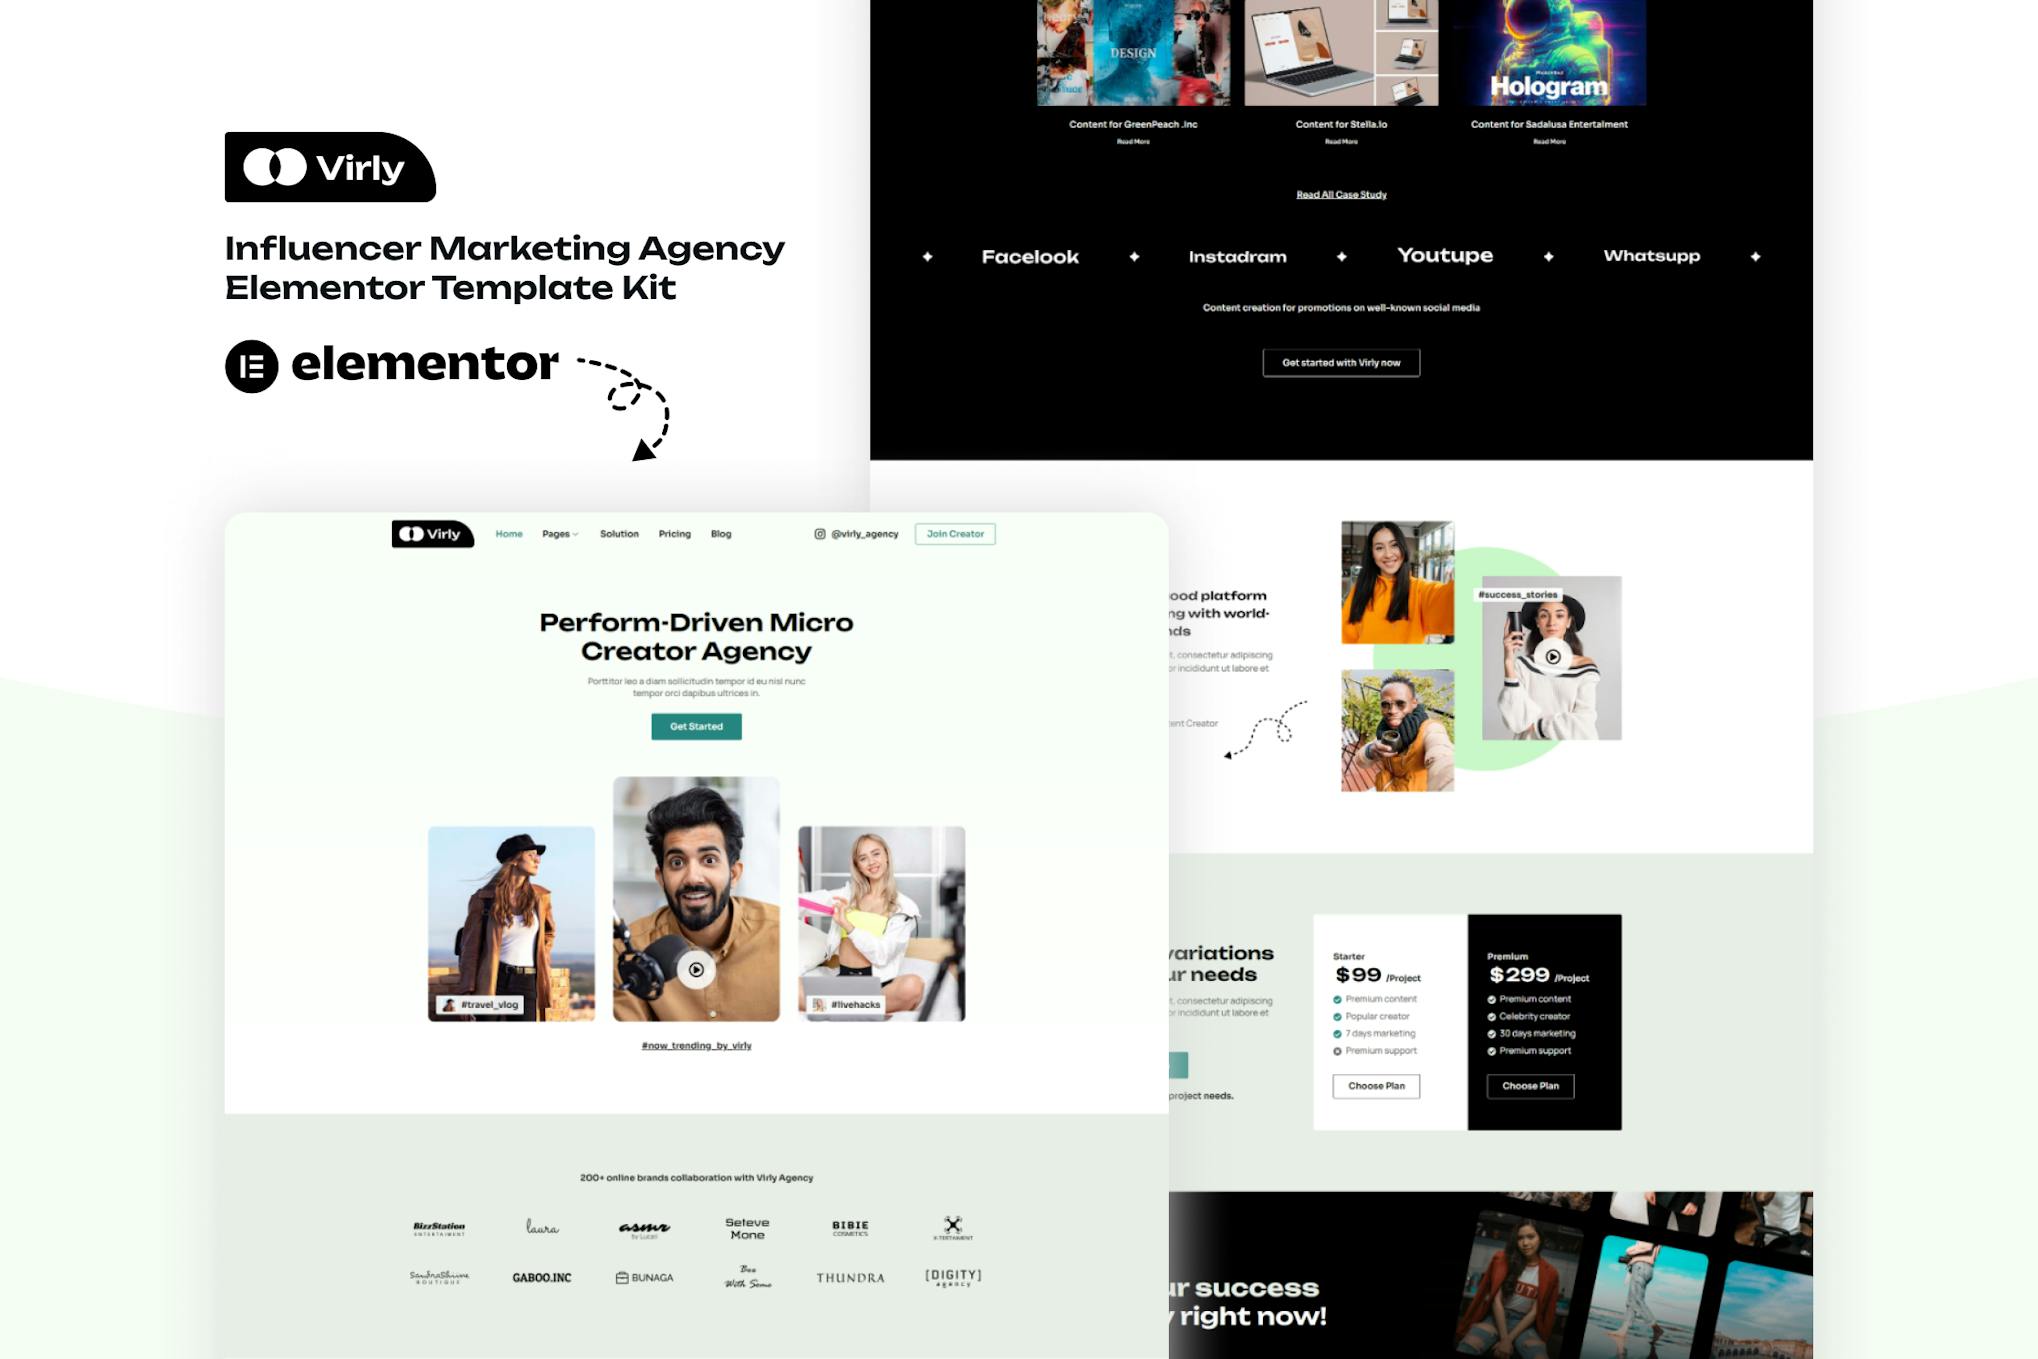 Download Virly - Influencer Marketing Agency Elementor Template Kit